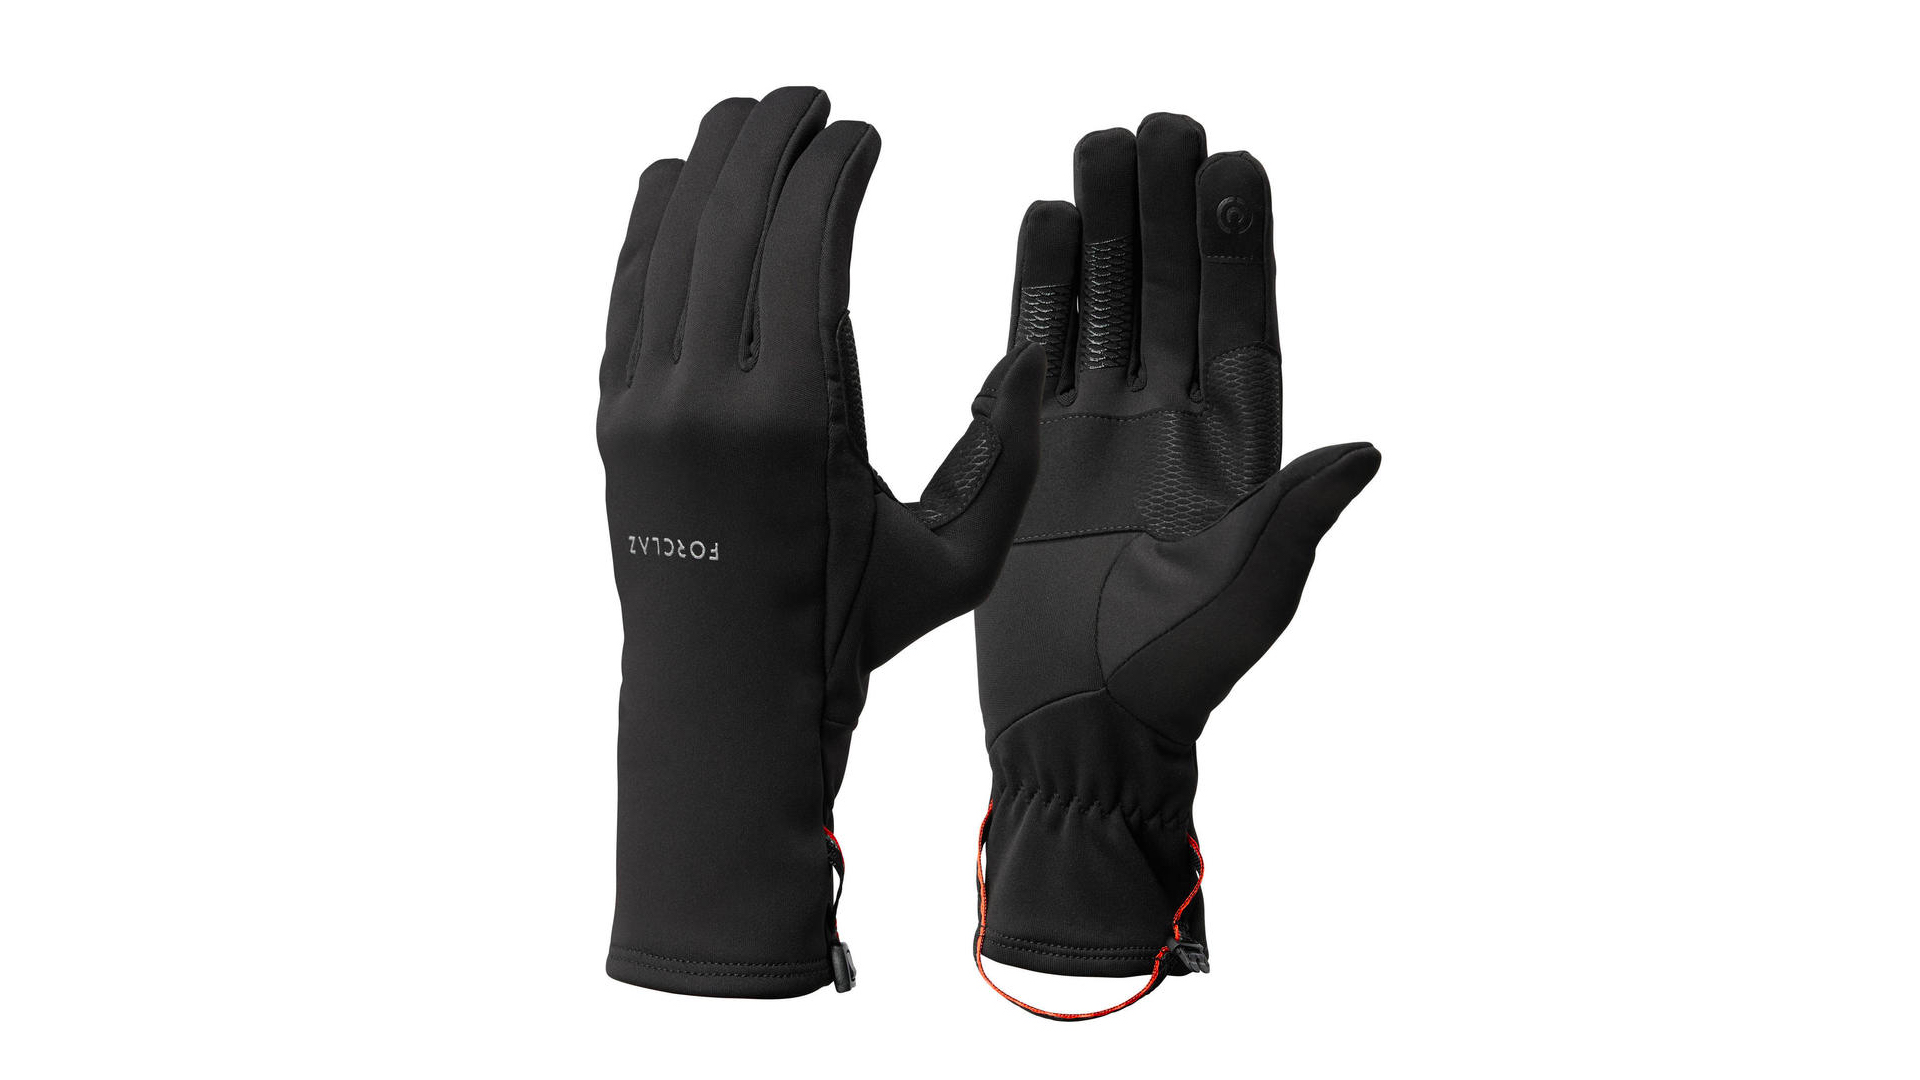 Advnture | 500 Forclaz Trek Mountain gloves review